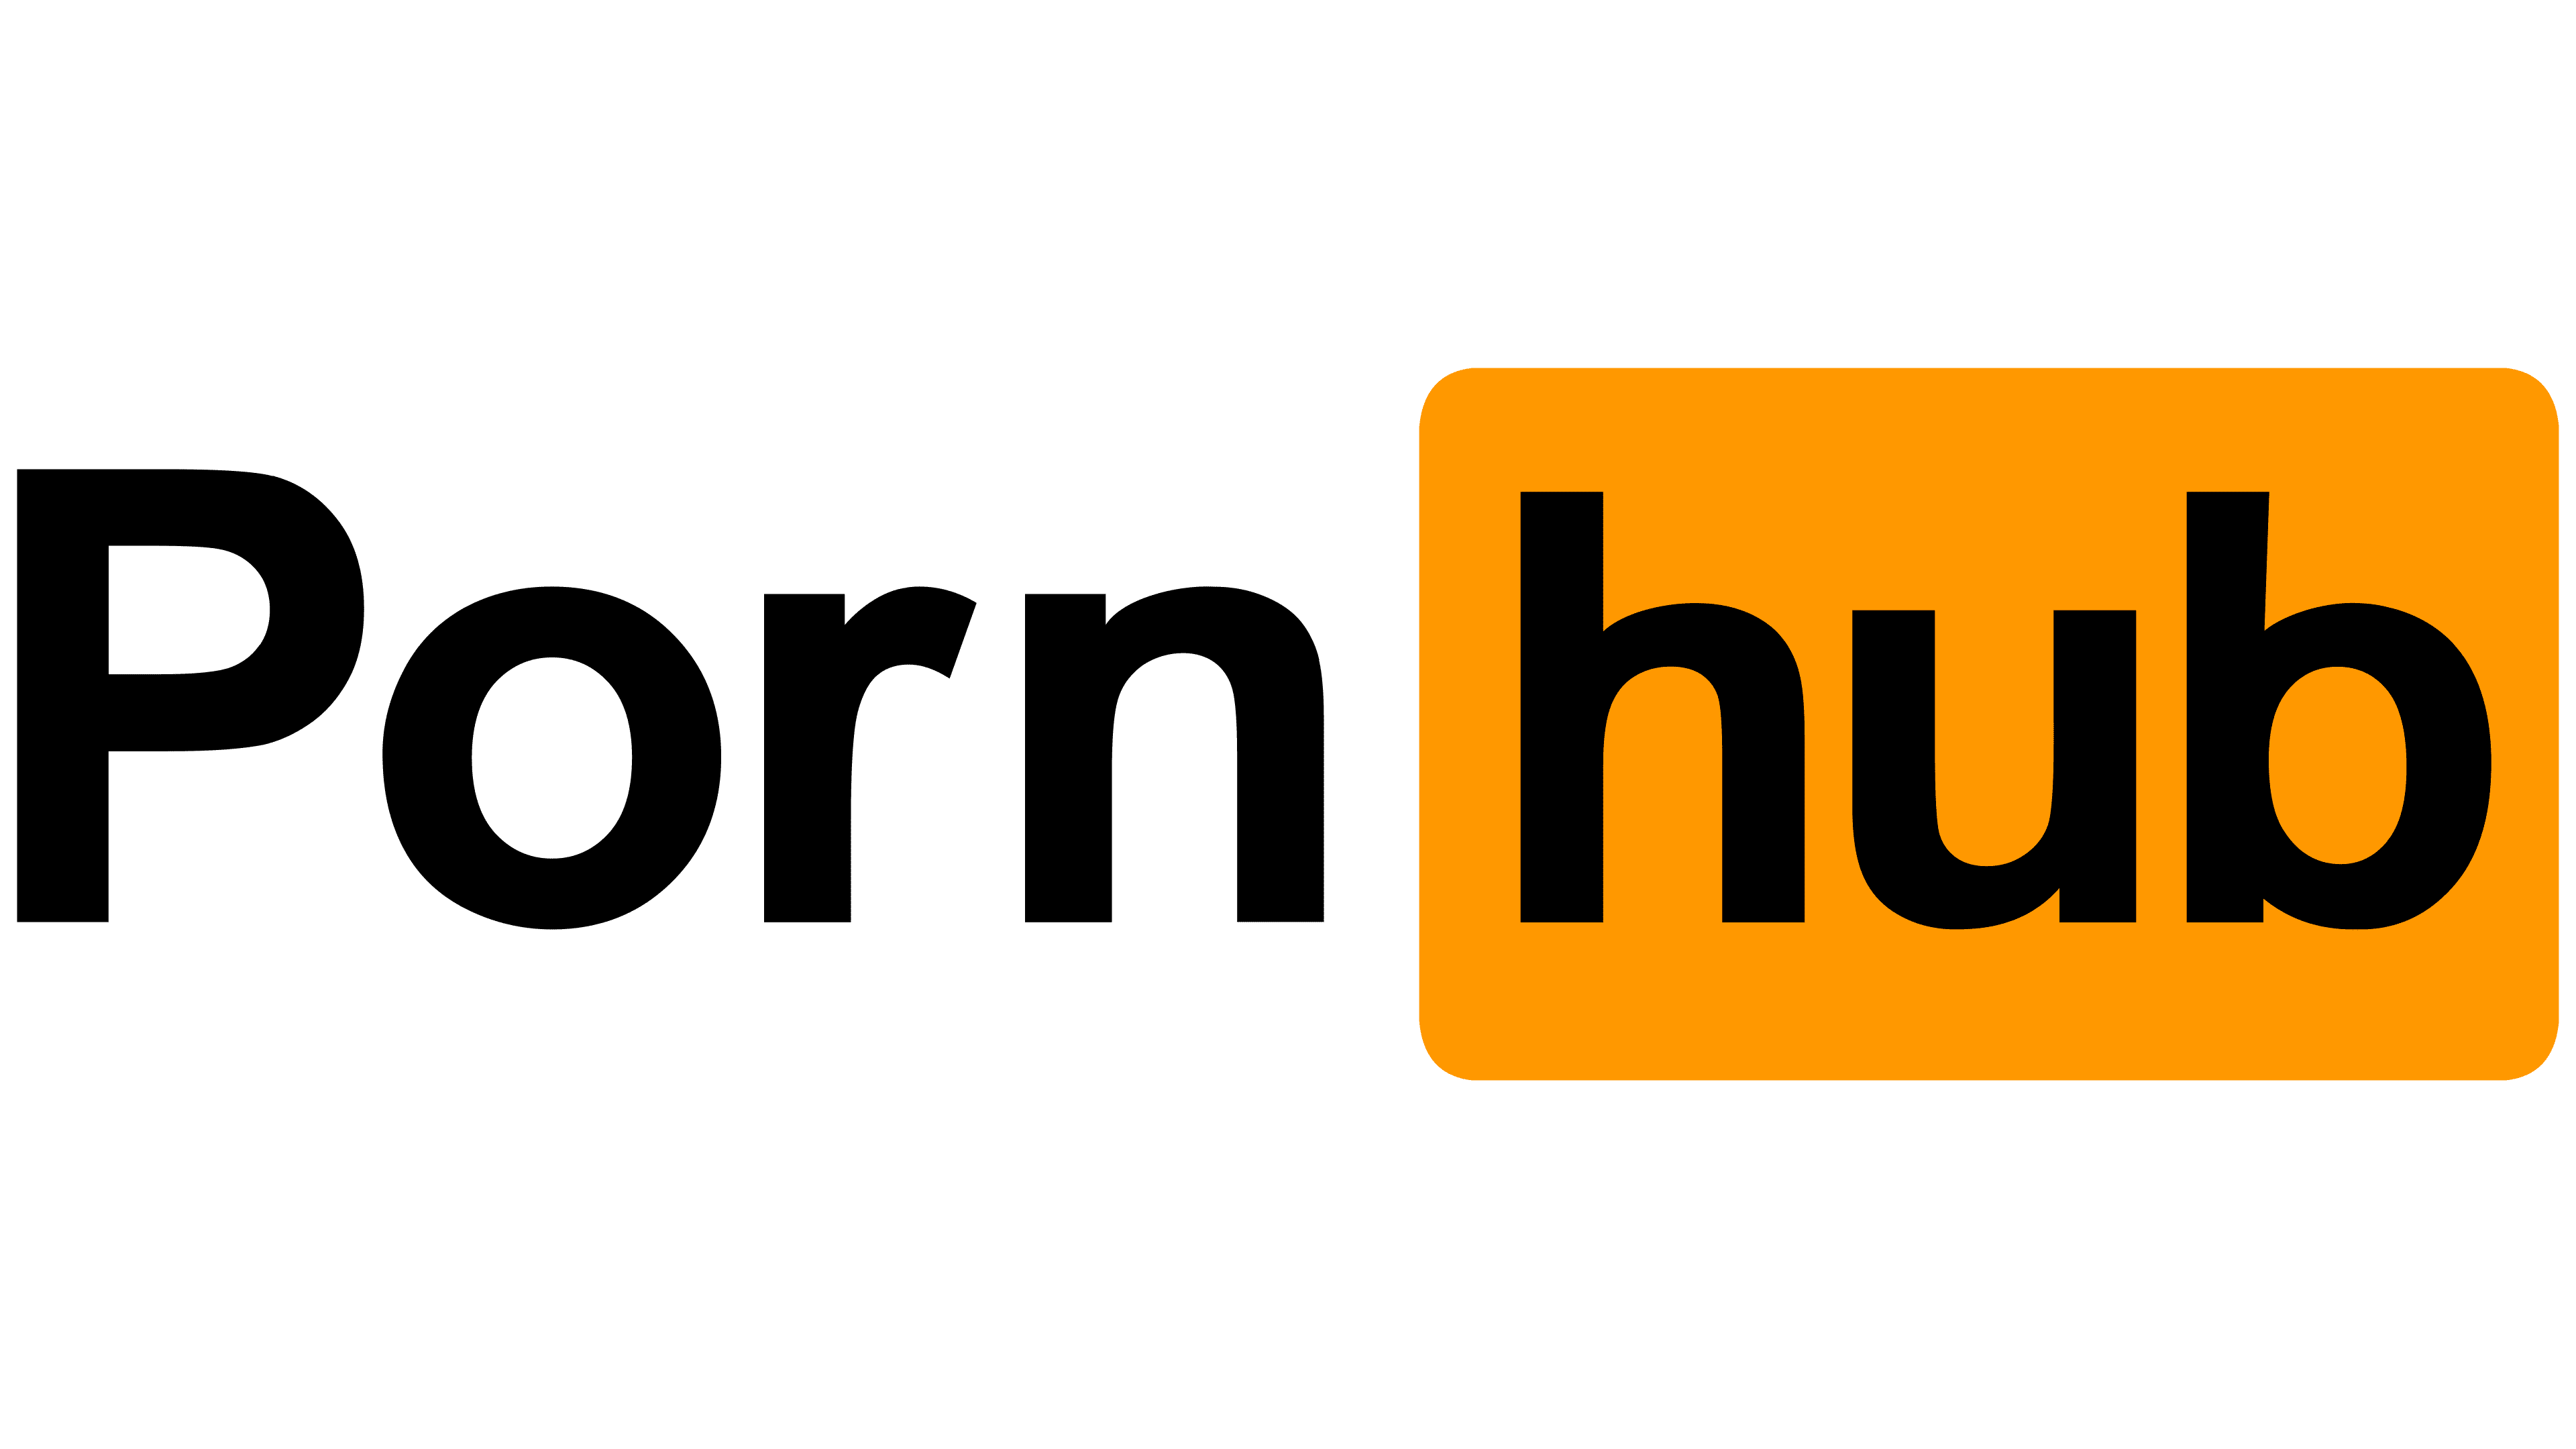 Top Porn Brands - Top Best Porn Logos Sites and Studios